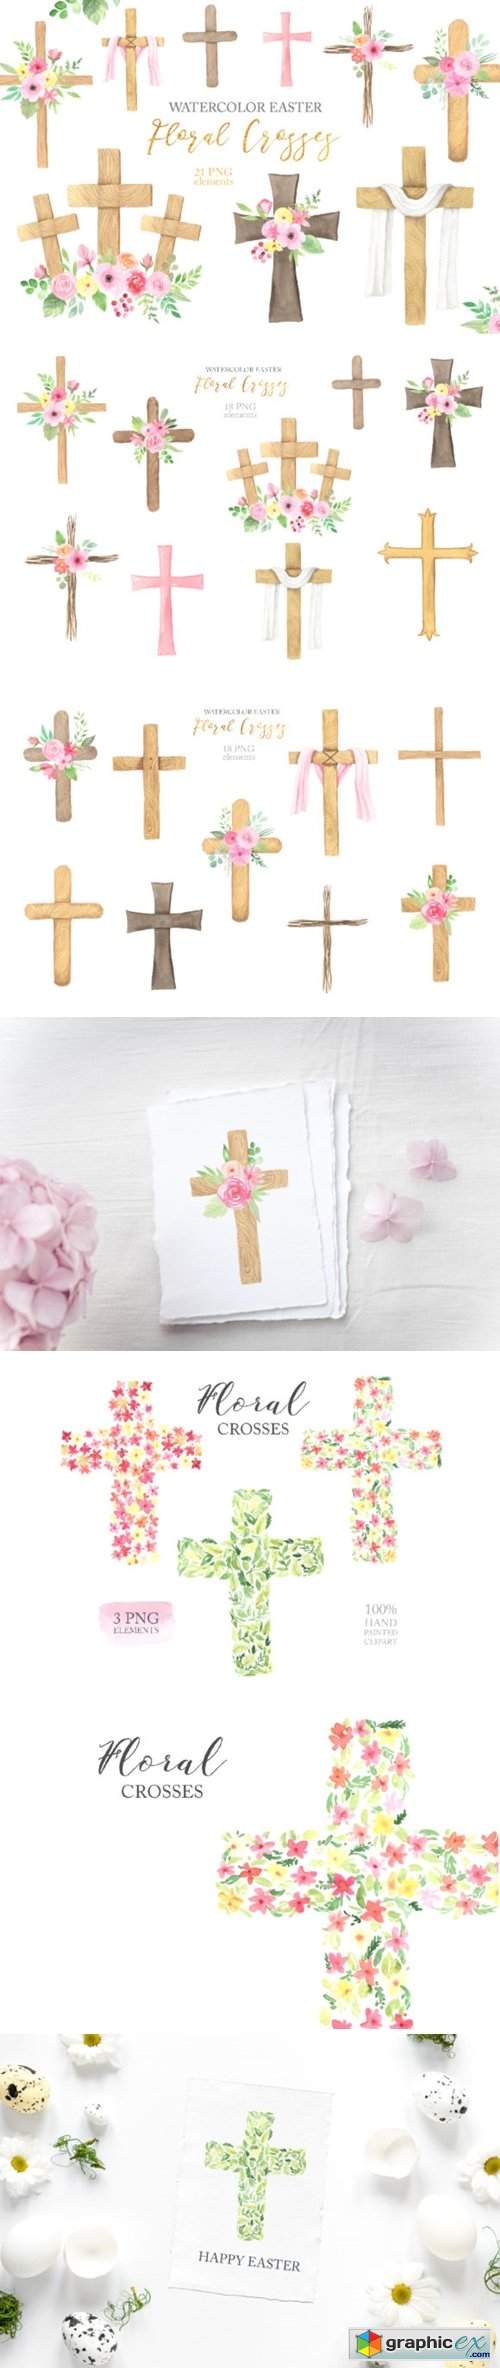  Watercolor Easter Floral Crosses 